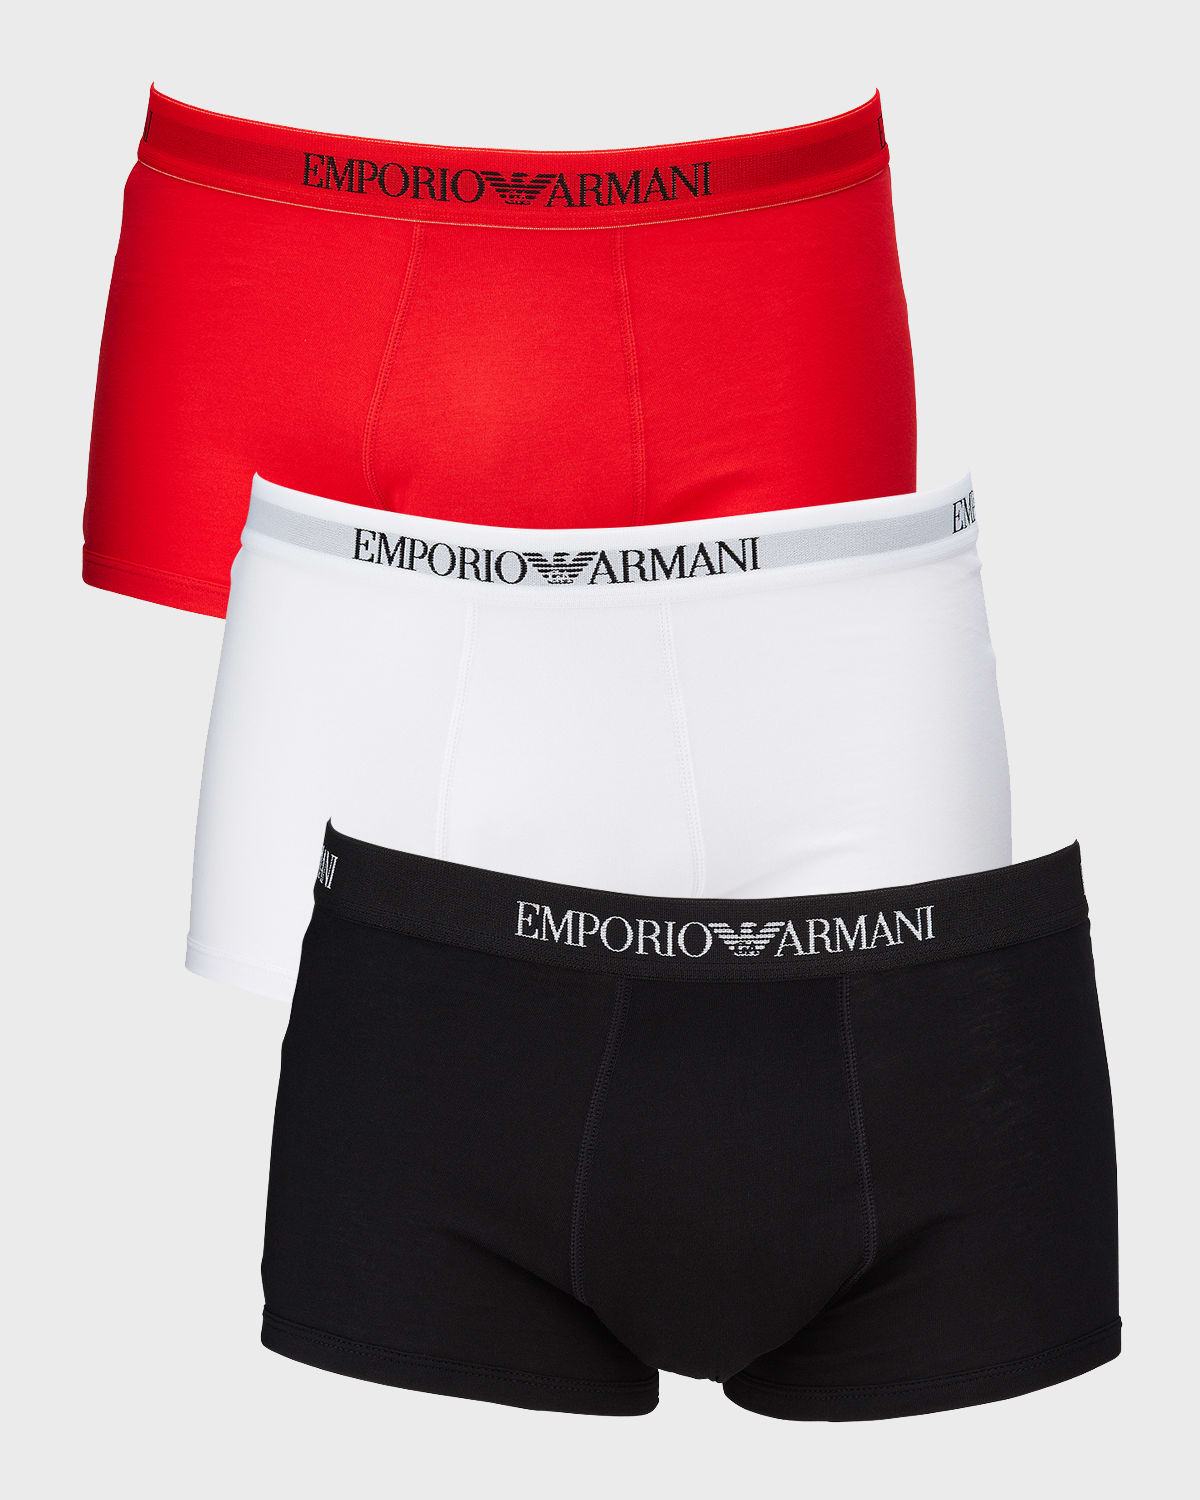 Emporio Armani Men's 3-pack Trunks In Red/white/black